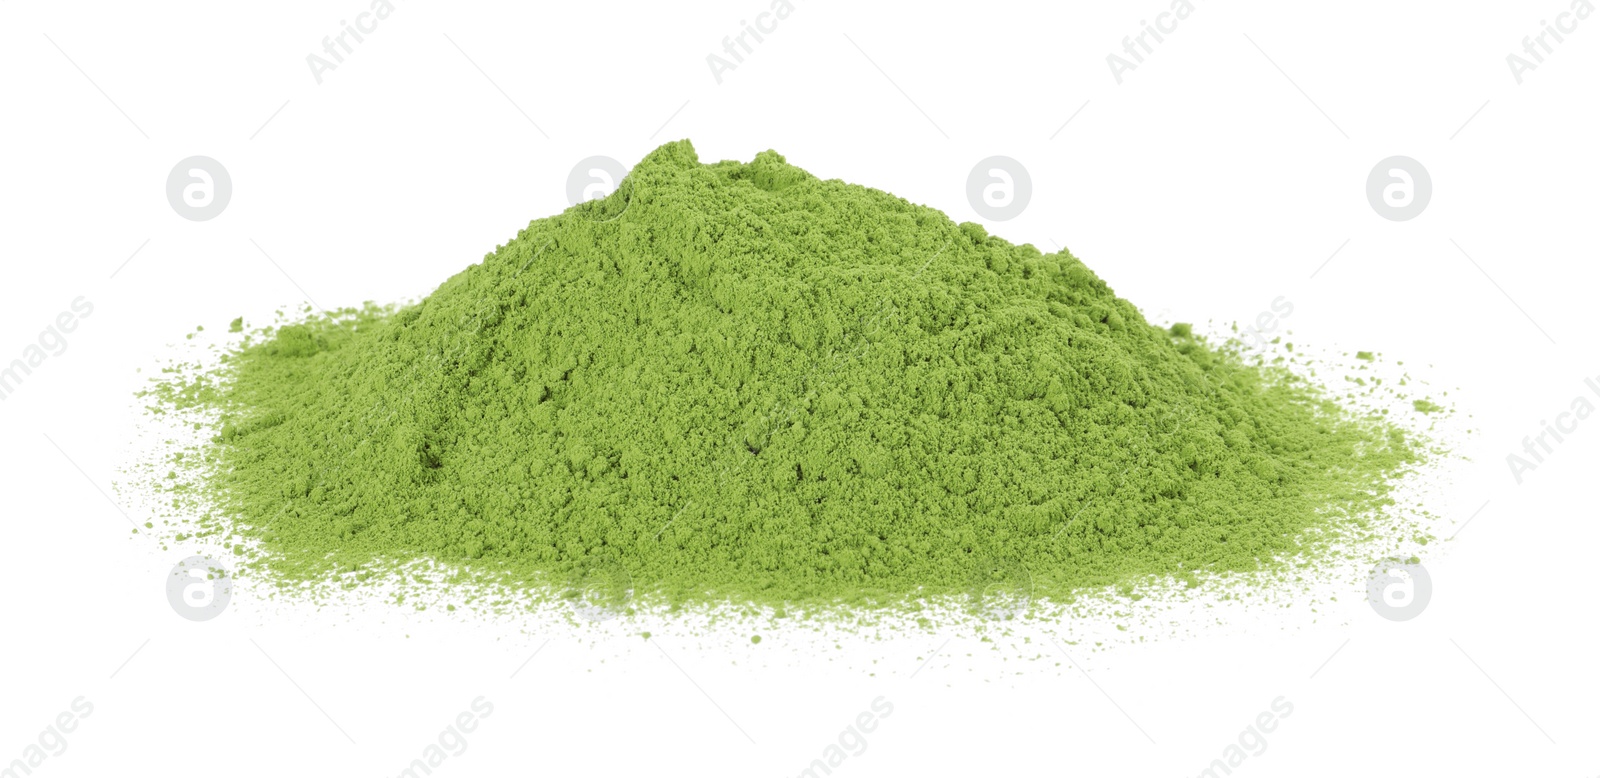 Photo of Pile of green matcha powder isolated on white